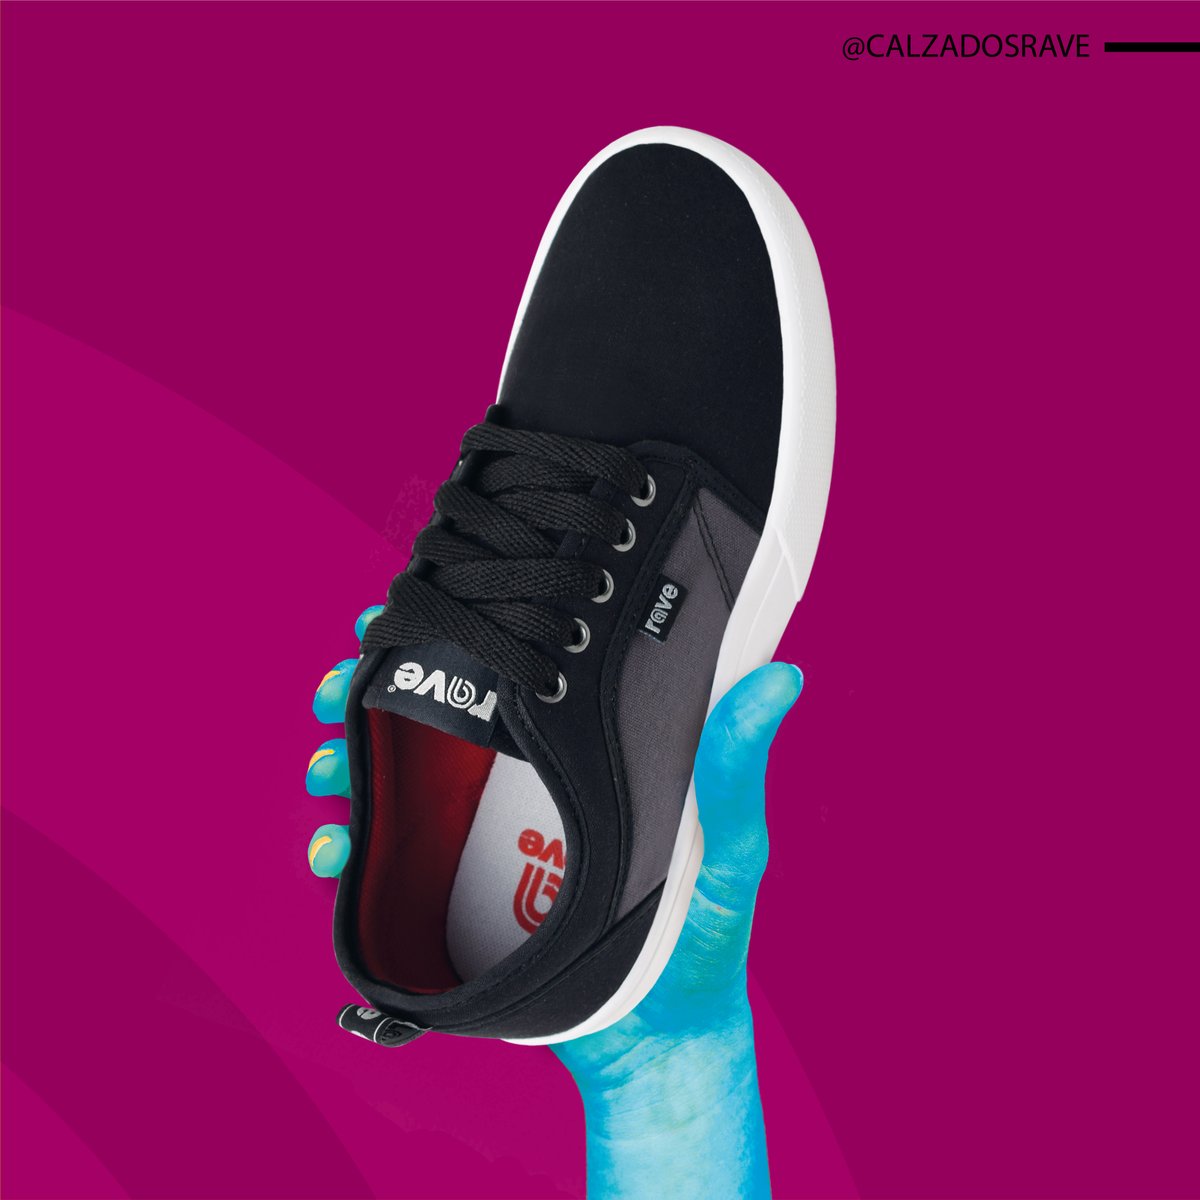 Calzados on Twitter: "Cual es tu #Mood de hoy?! El nuestro es #Rave https://t.co/zqQZRzCcFc . . #calzadosrave #zapatos #sneaker #teen #kids #love #trend #instagood #fashion #zapatillas #contento https://t.co/IYpuAkDvRr" / Twitter